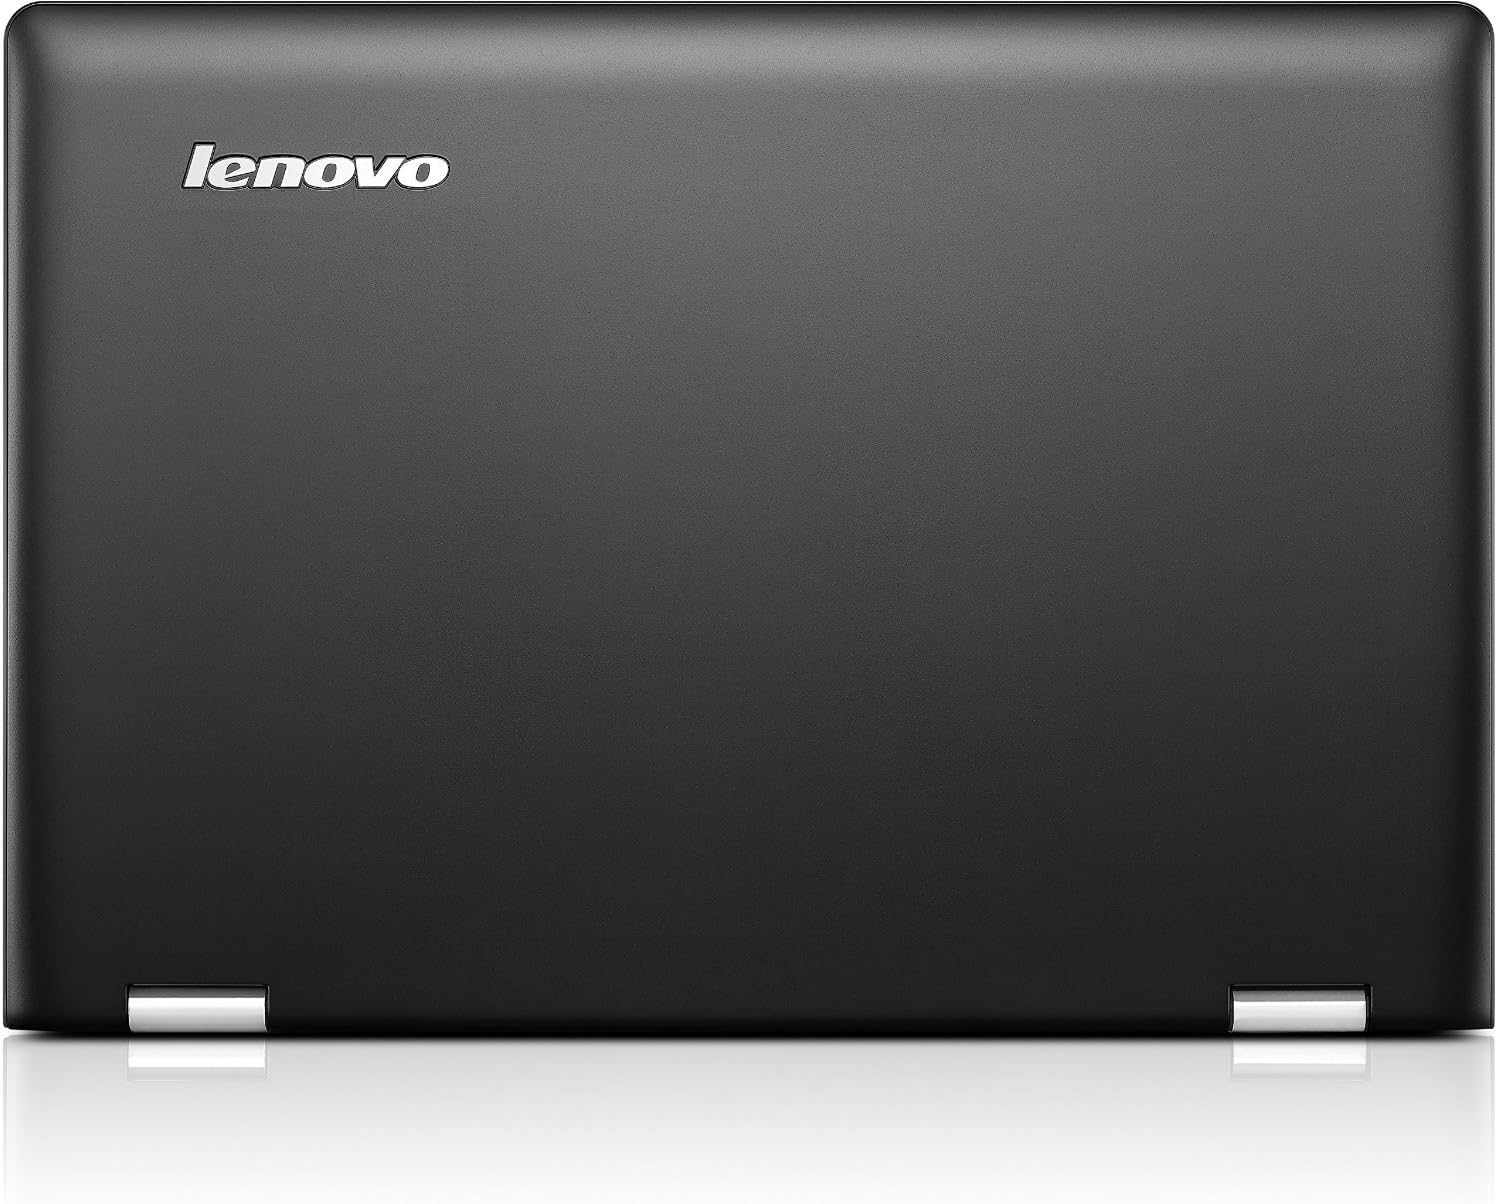 Lenovo ThinkPad X1 Carbon 3rd Generation - Core i7-5600U 2.6GHz, 8GB, 256GB SSD, 14.0in FHD 1920x1080, WIFI, Bluetooth, HDMI, USB 3.0, Windows 10 Pro 64 Bit(Renewed)